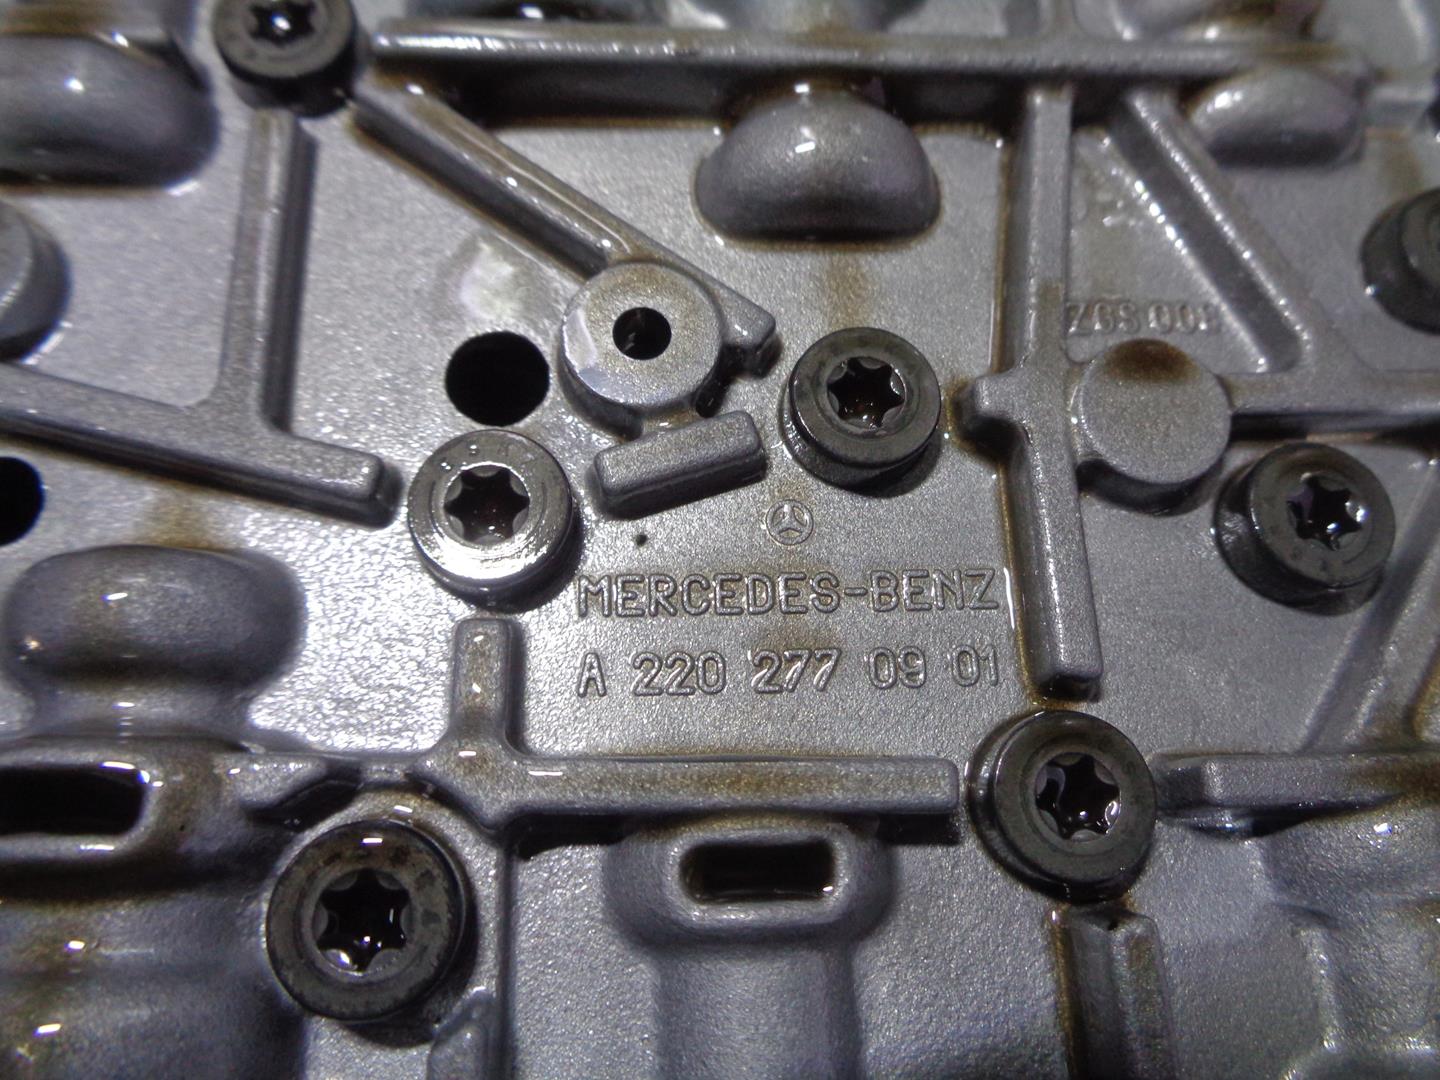 MERCEDES-BENZ R-Class W251 (2005-2017) Другие детали коробки передач A2202770901, 5WP21101, SIEMENSVDO 24225231